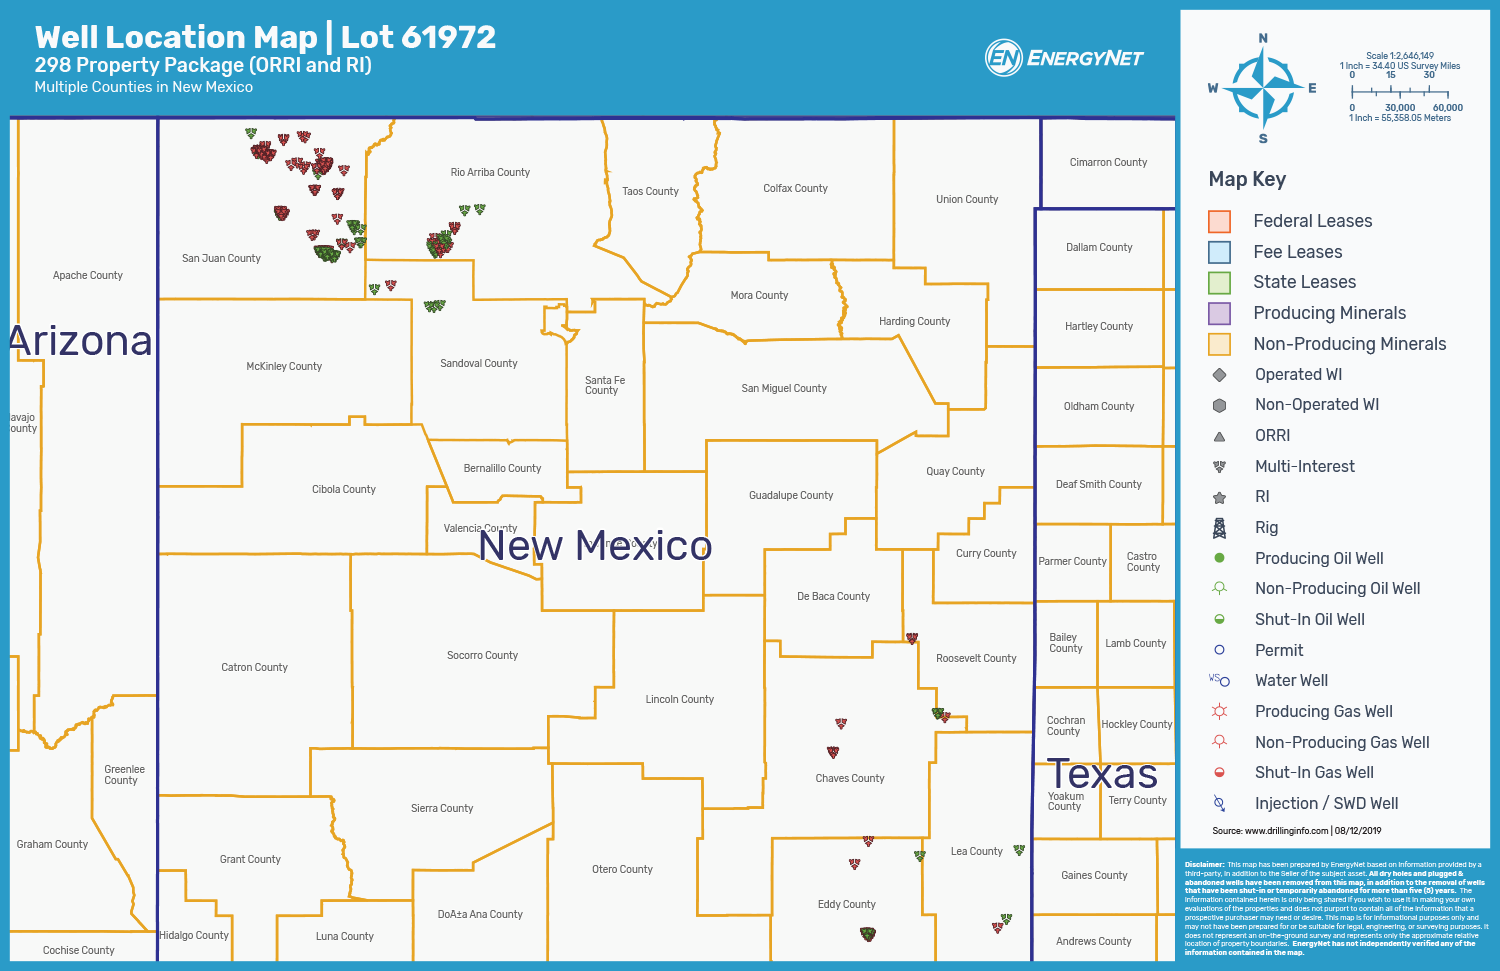 QEP New Mexico Royalties Asset Map (Source: EnergyNet)